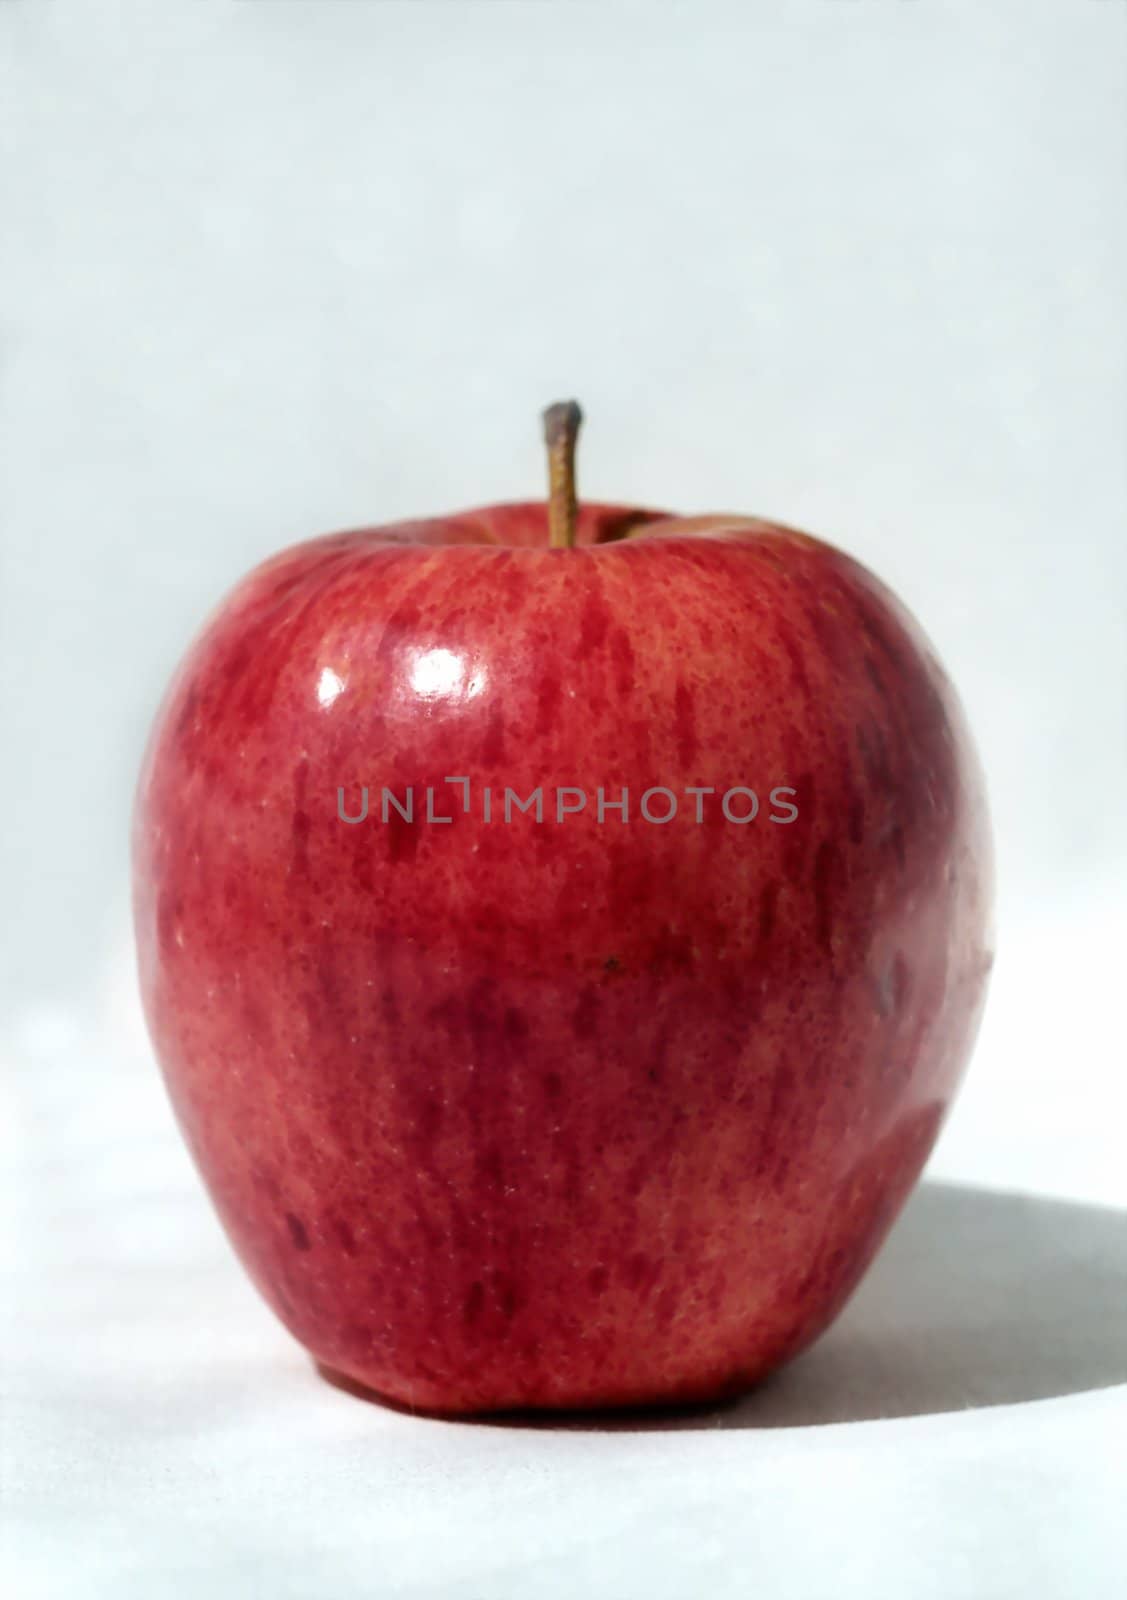 Big red apple in high key